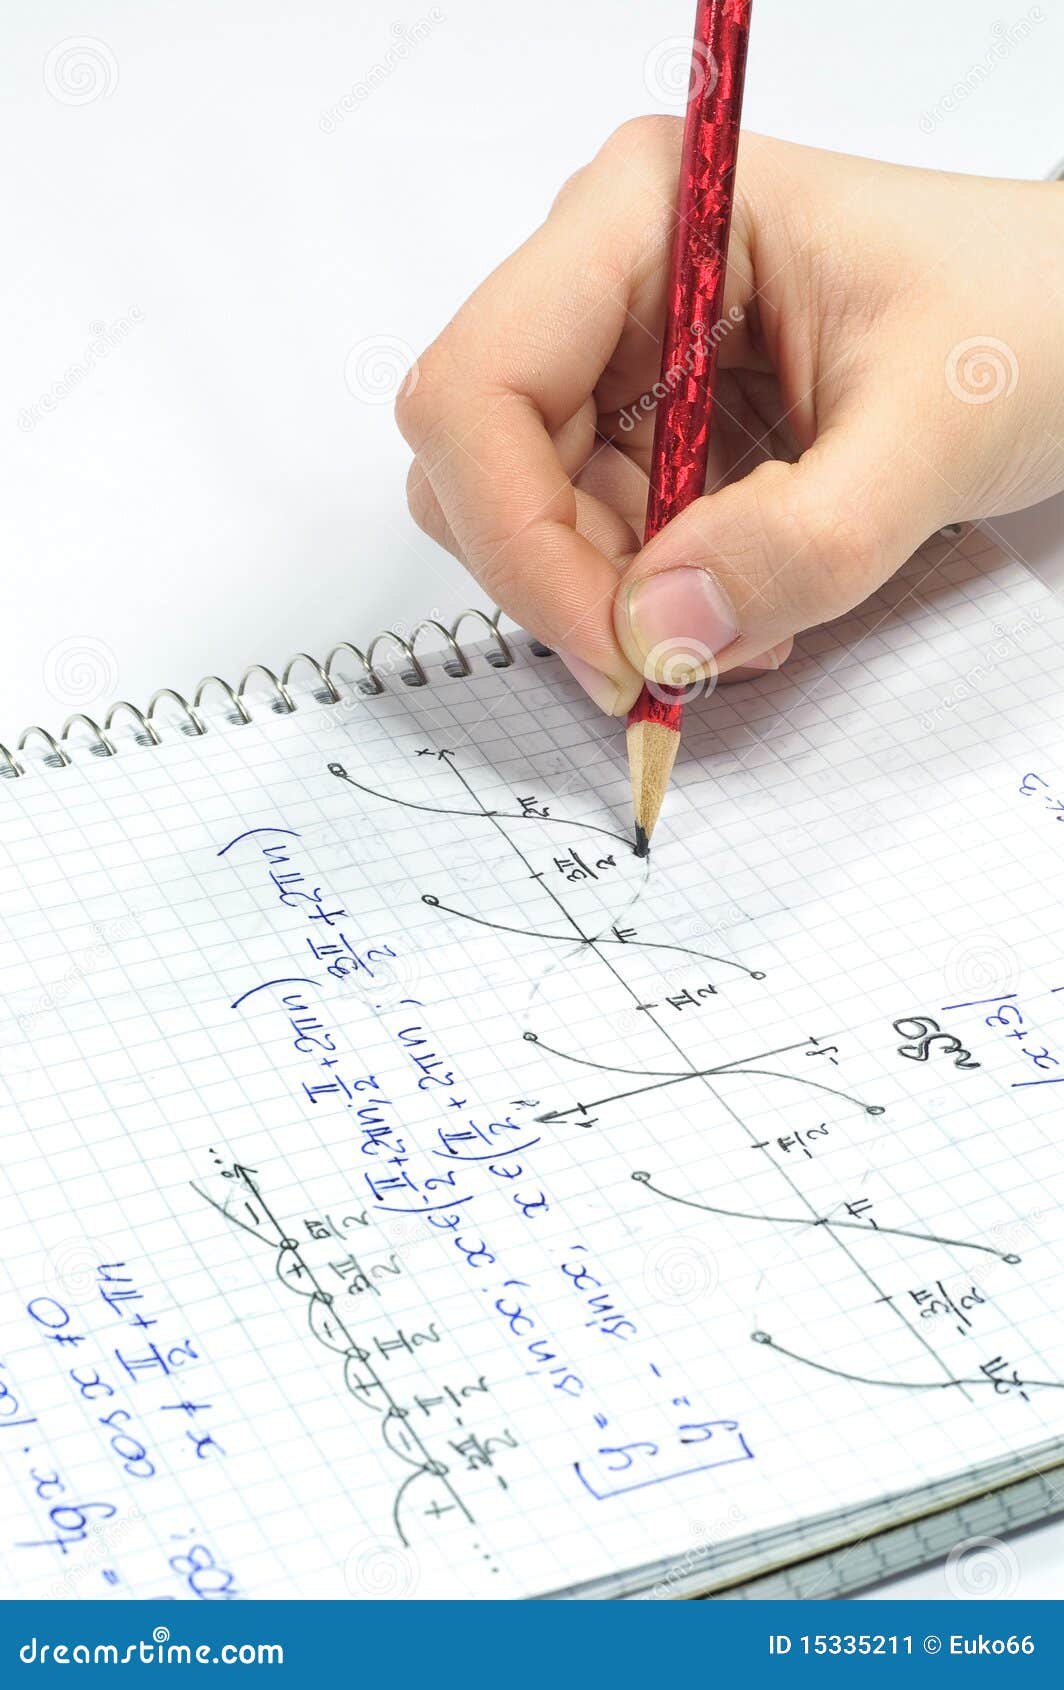 hand writing algebra equations